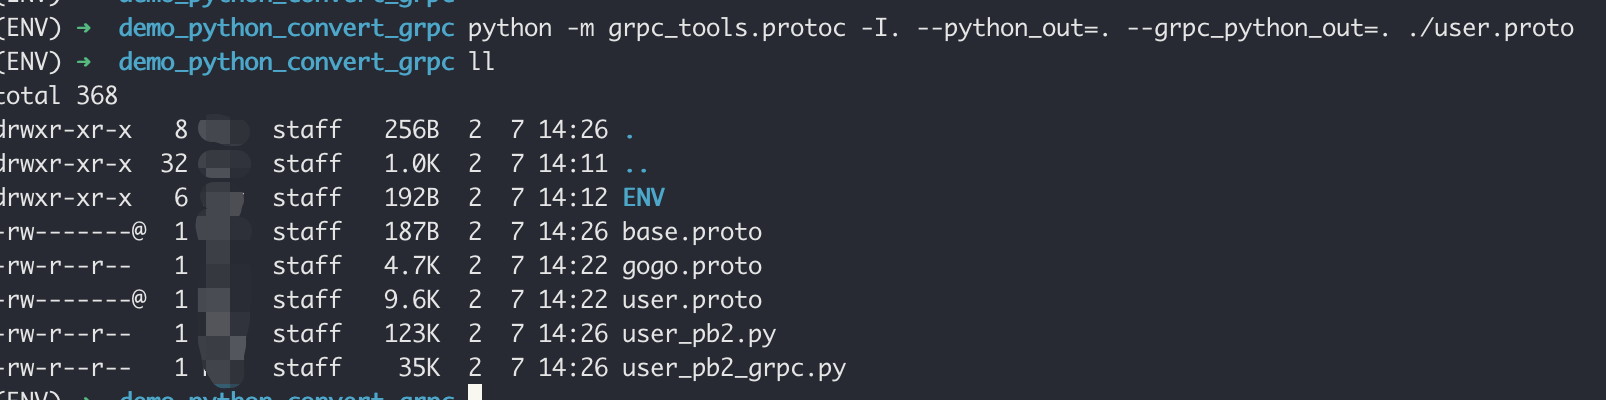 python_convert_grpc.png